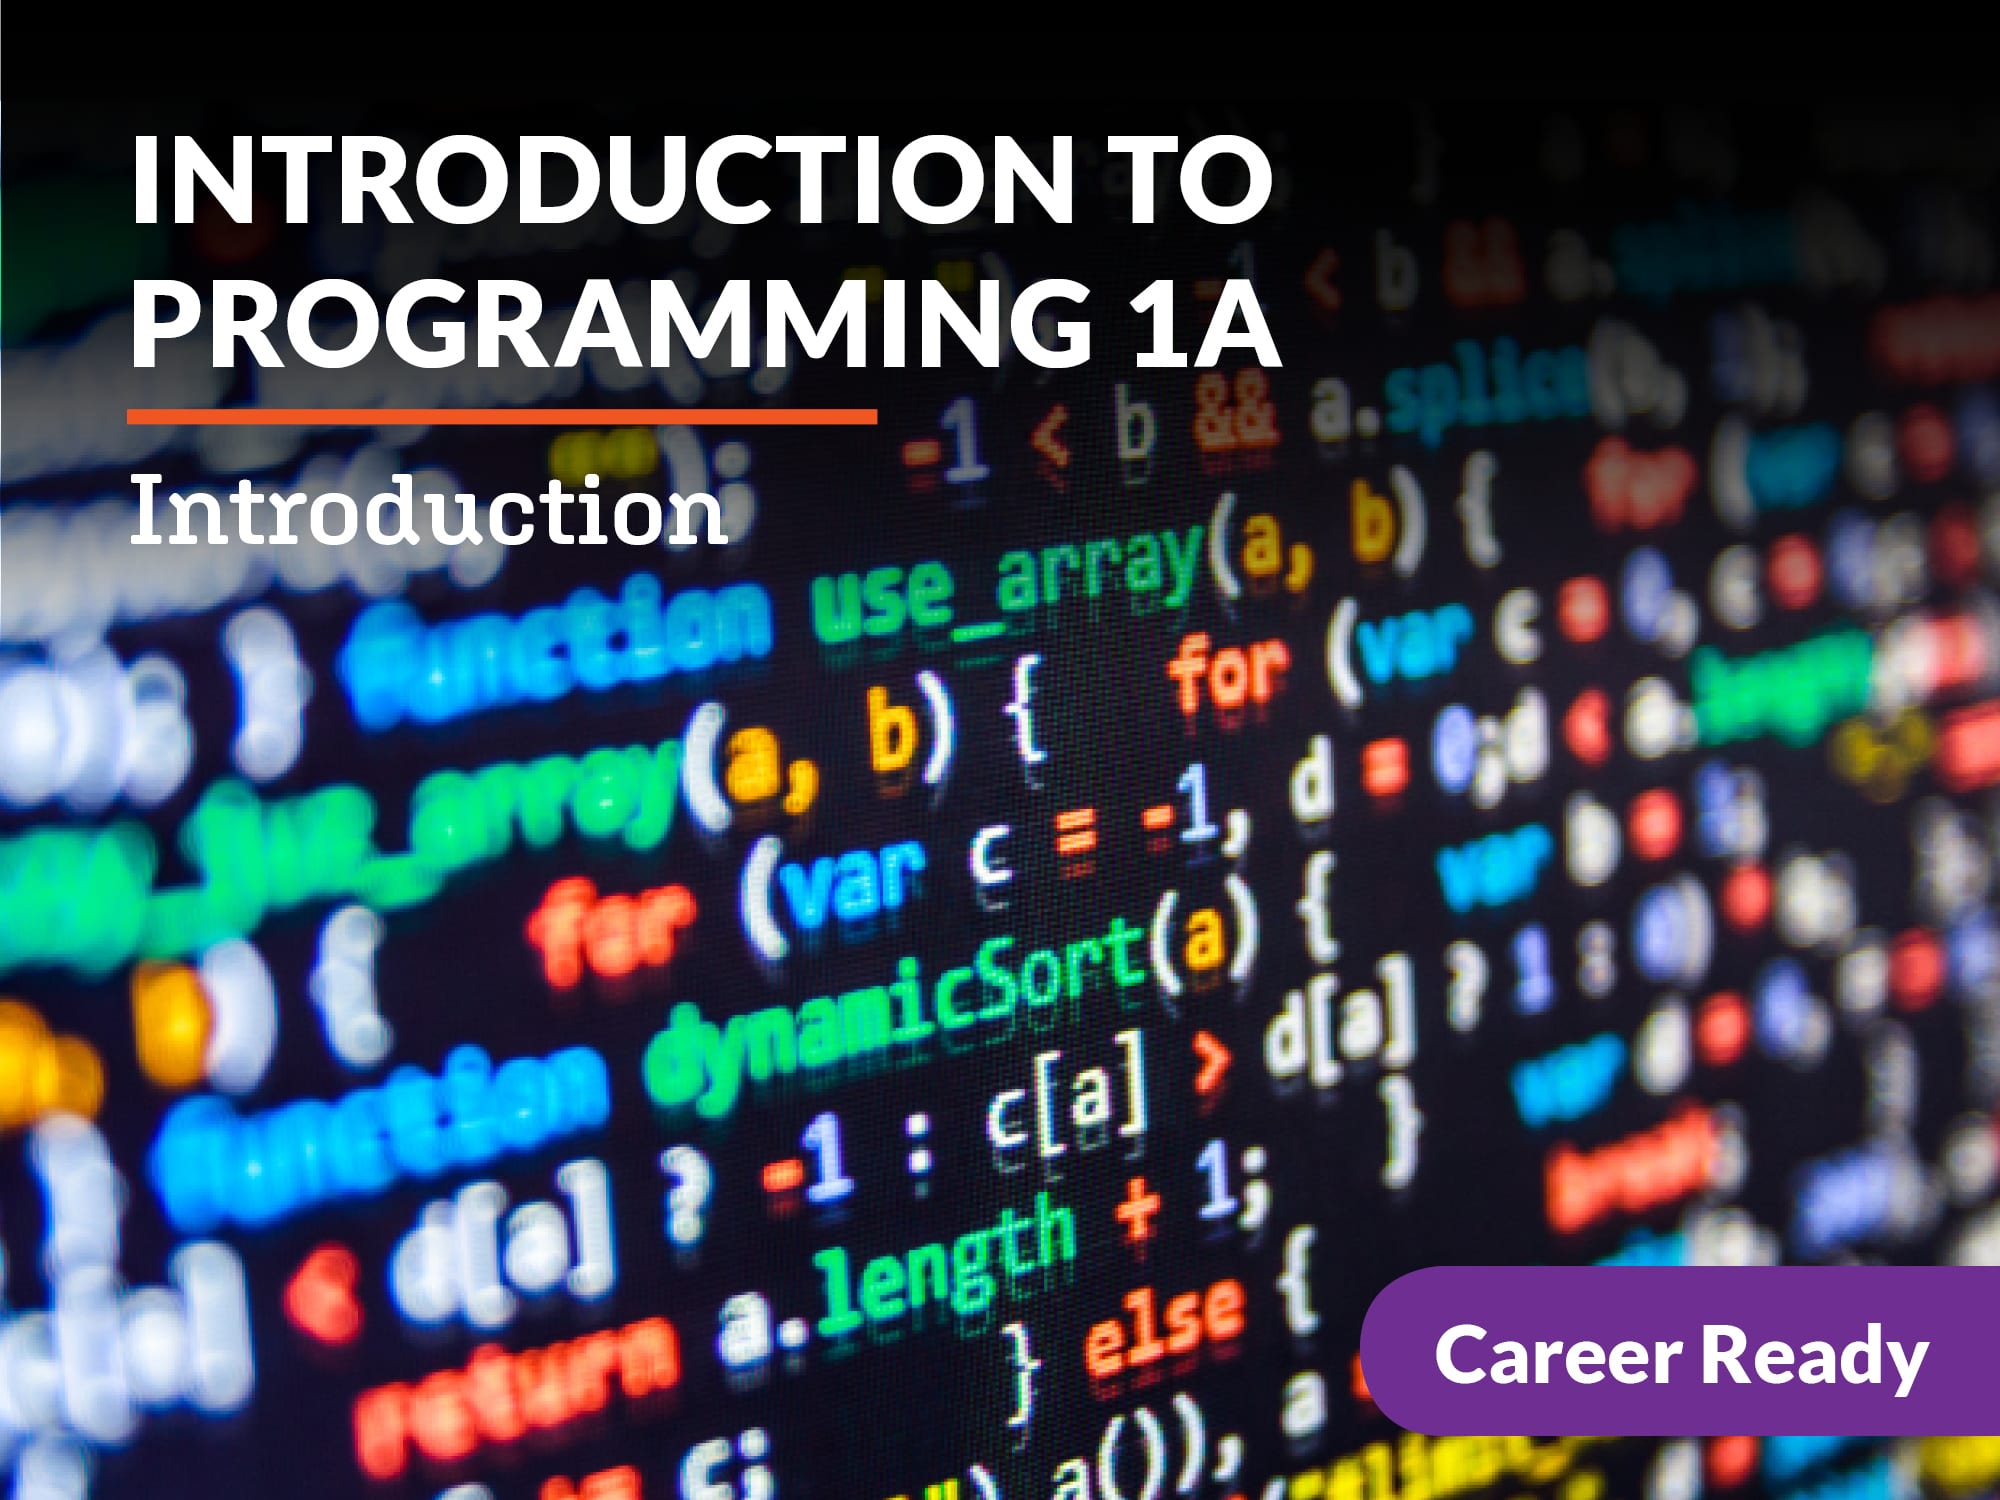 Intro to Programming